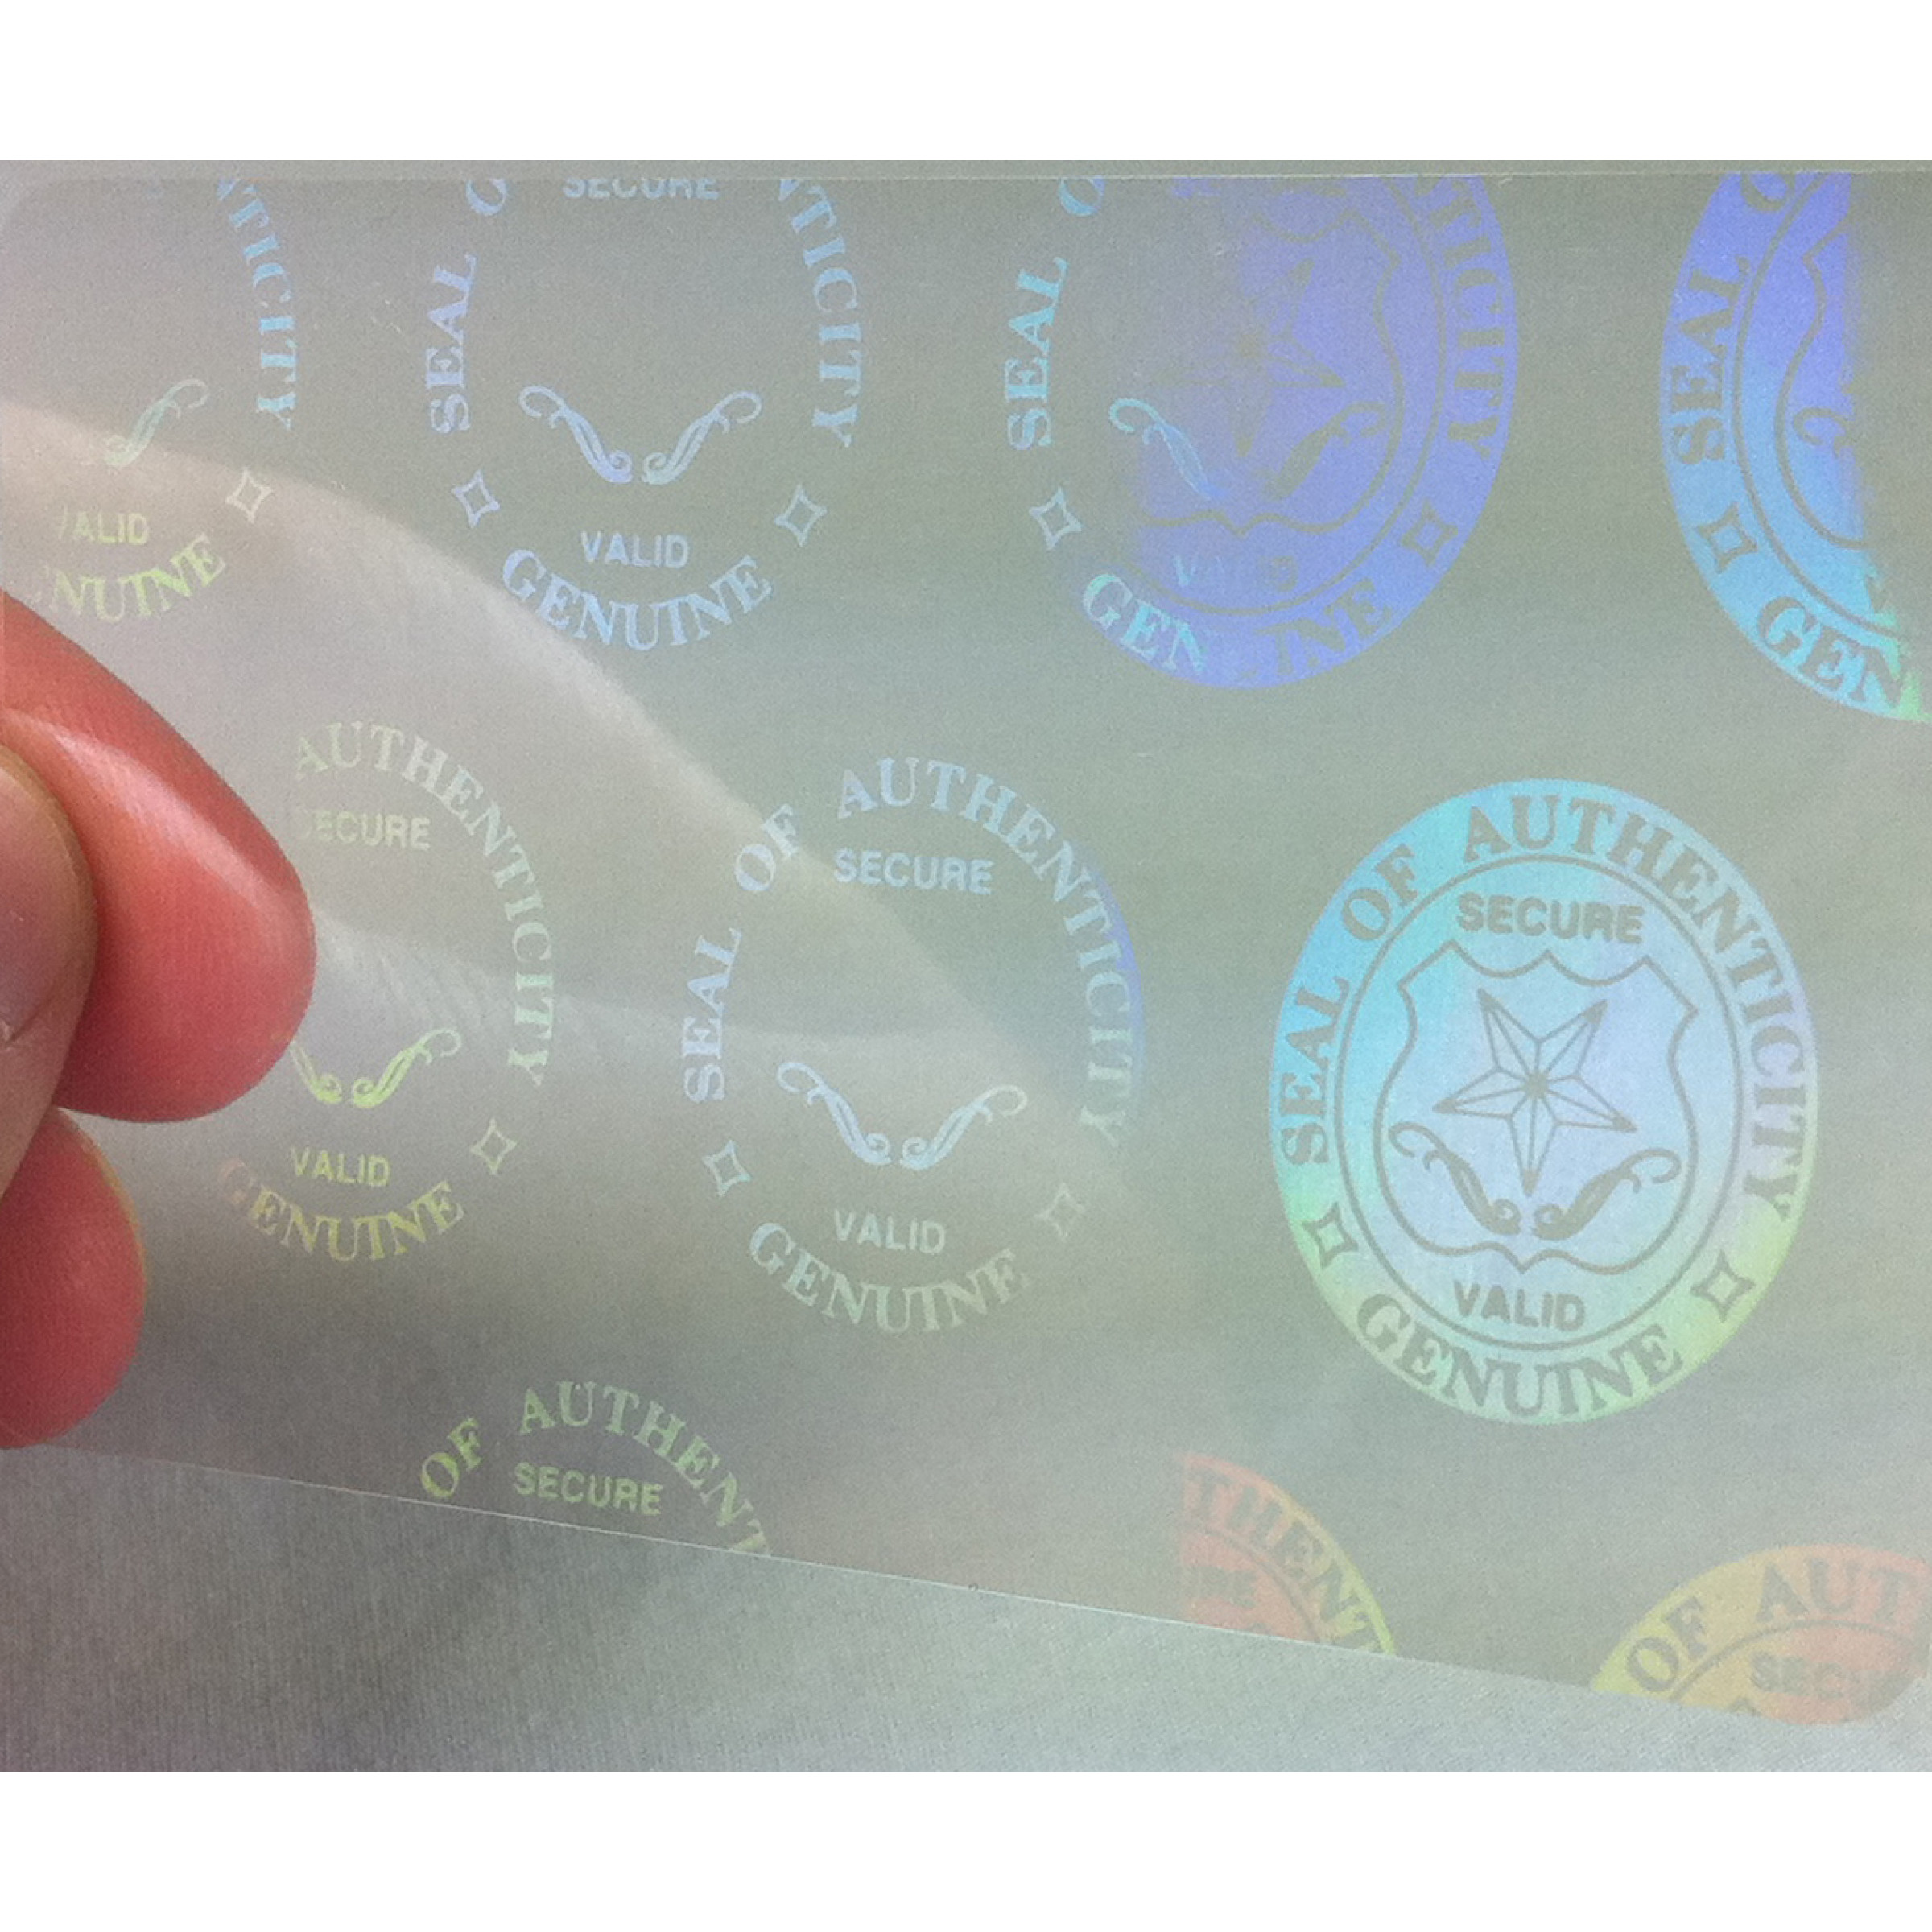 Hologram World Seal Overlays Inkjet Teslin ID Cards Lot of 25 